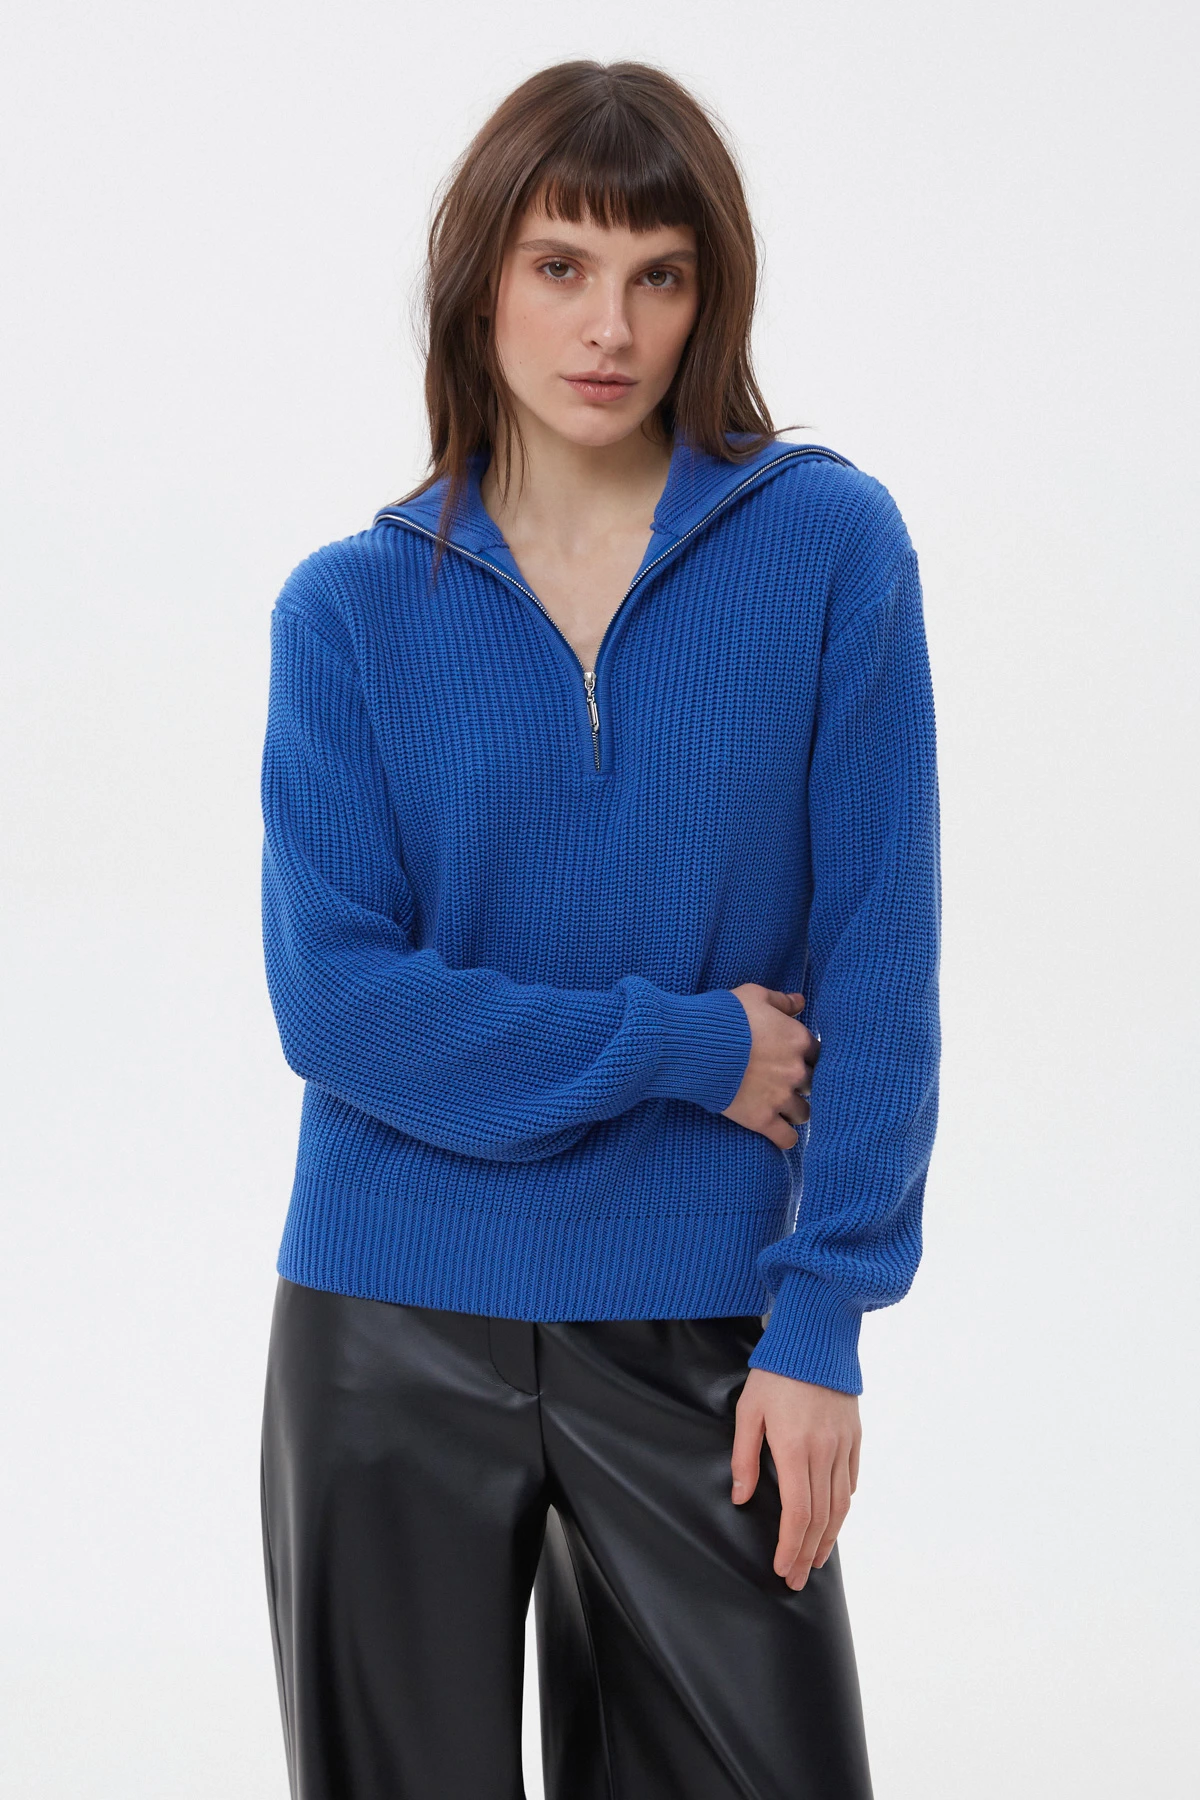 Blue cotton zip-up knit sweater, photo 1